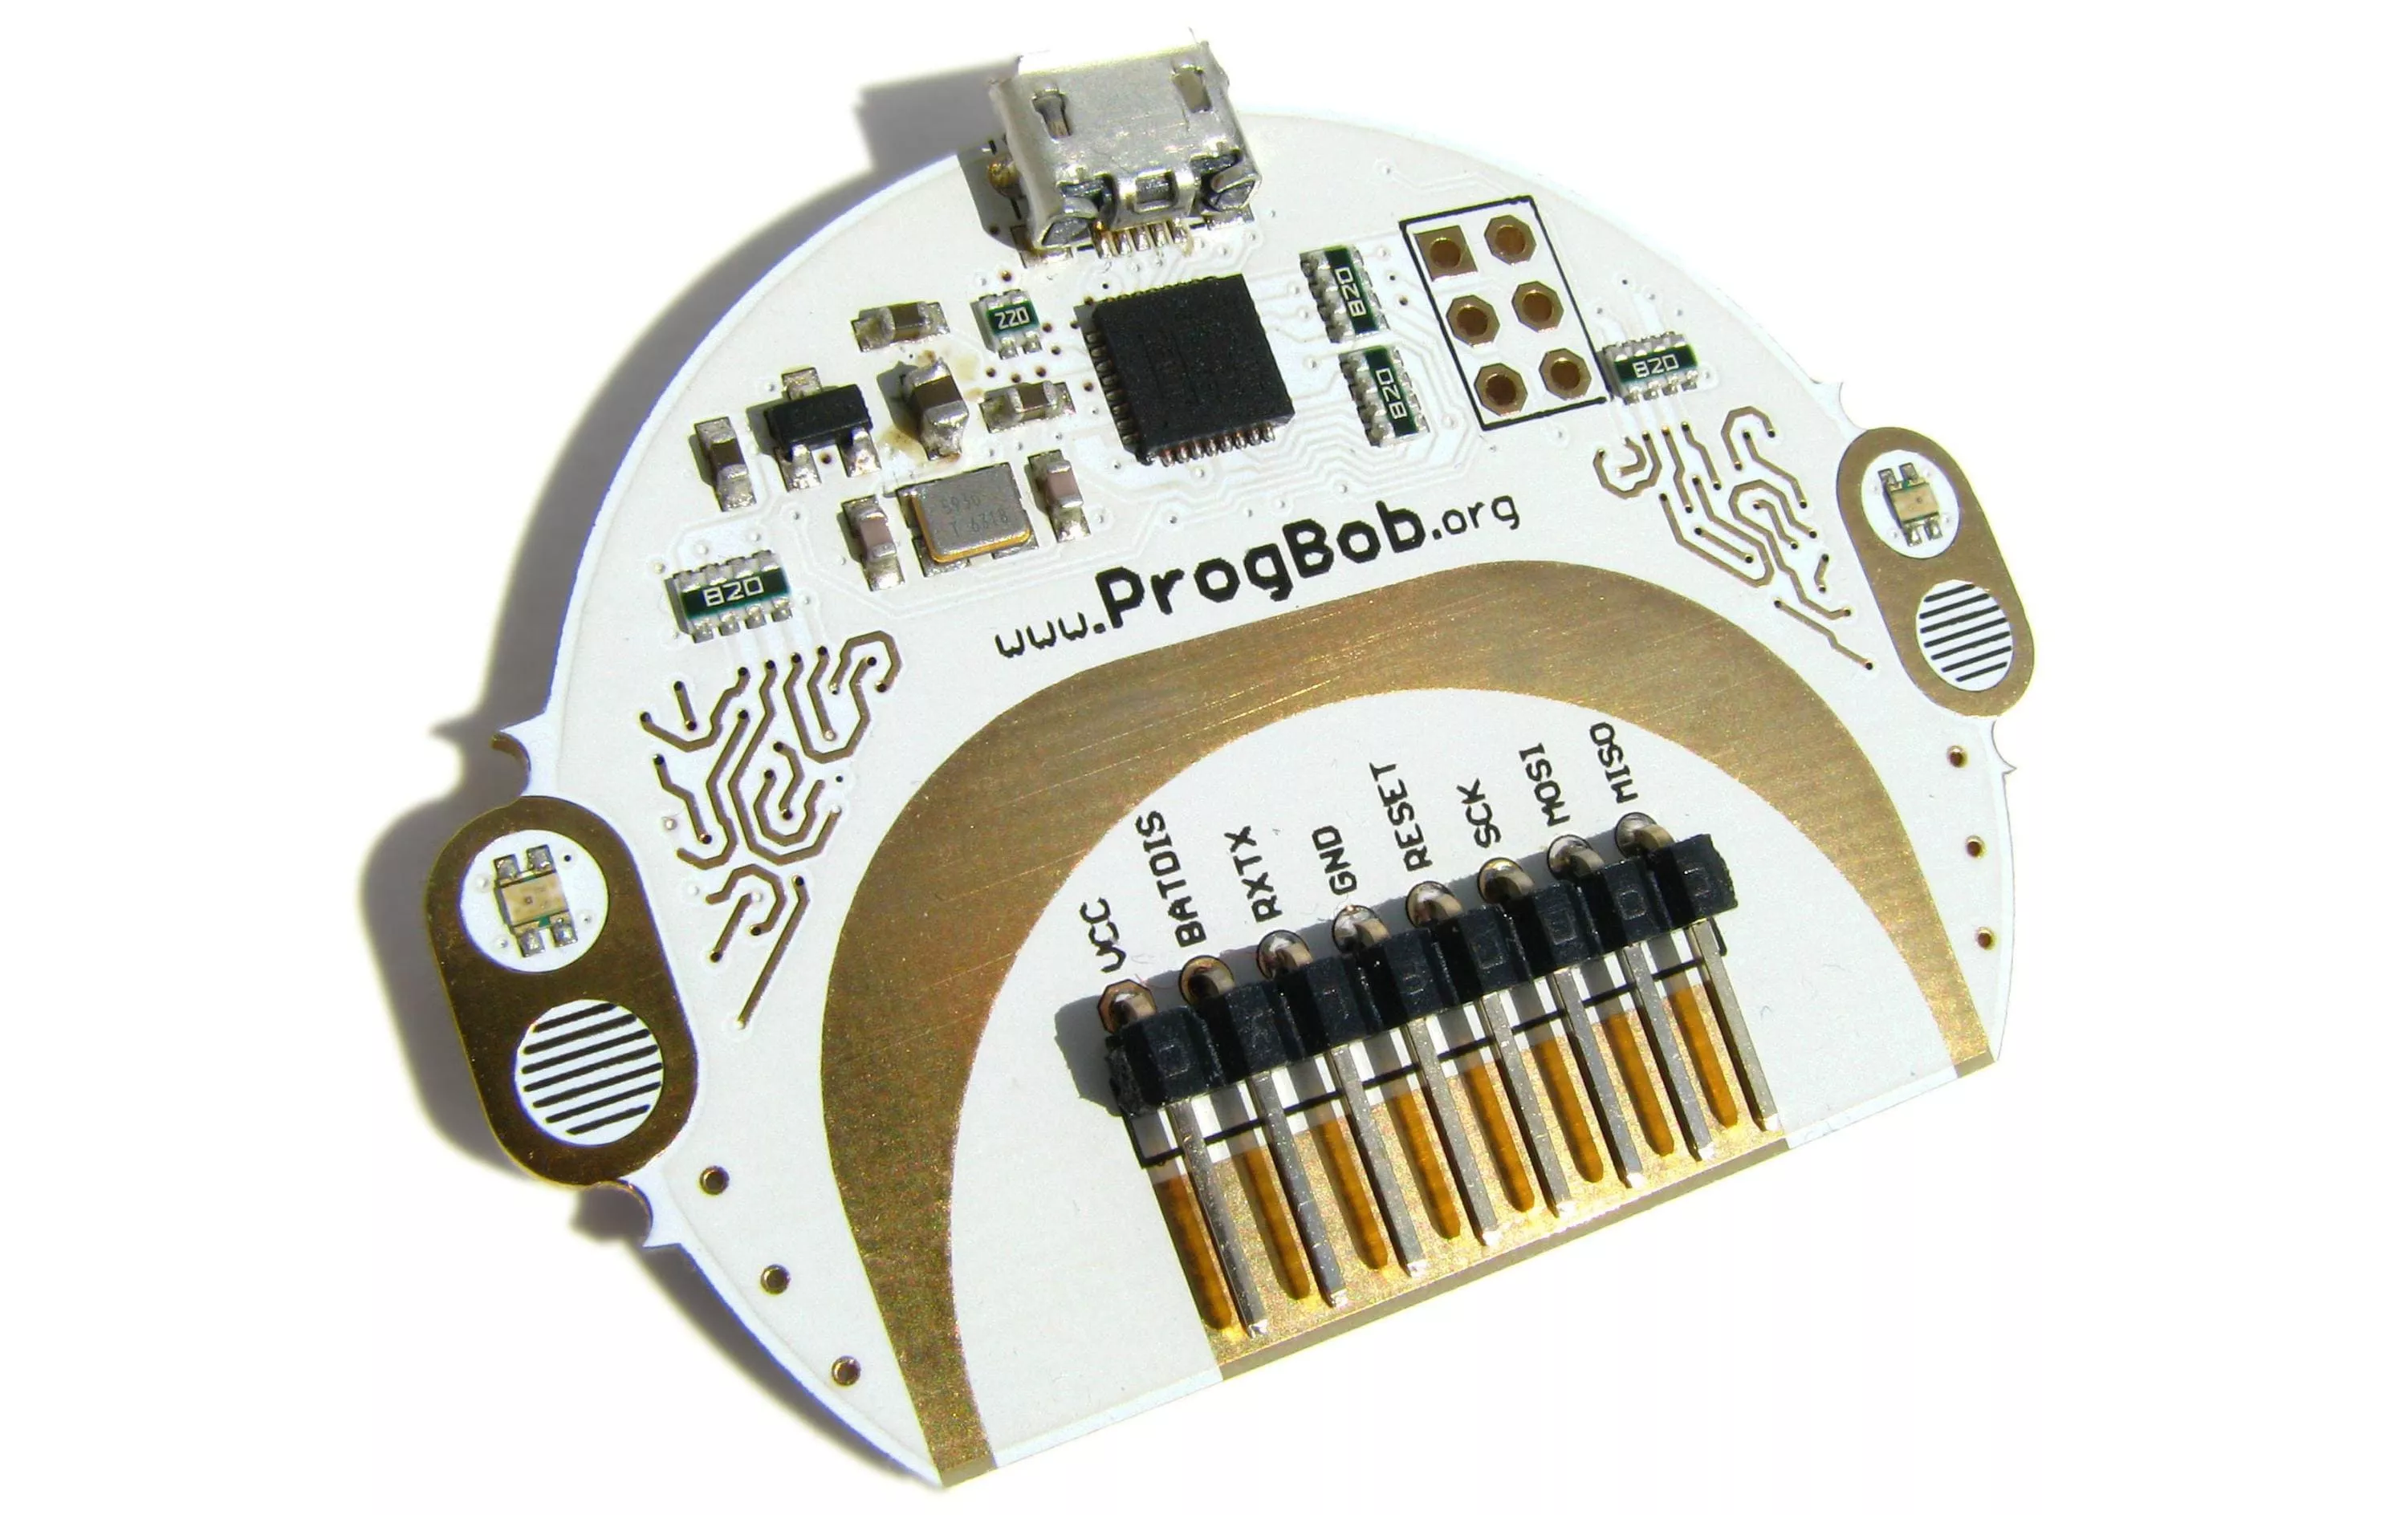 Fertigmodul ProgBob USB-Programmer